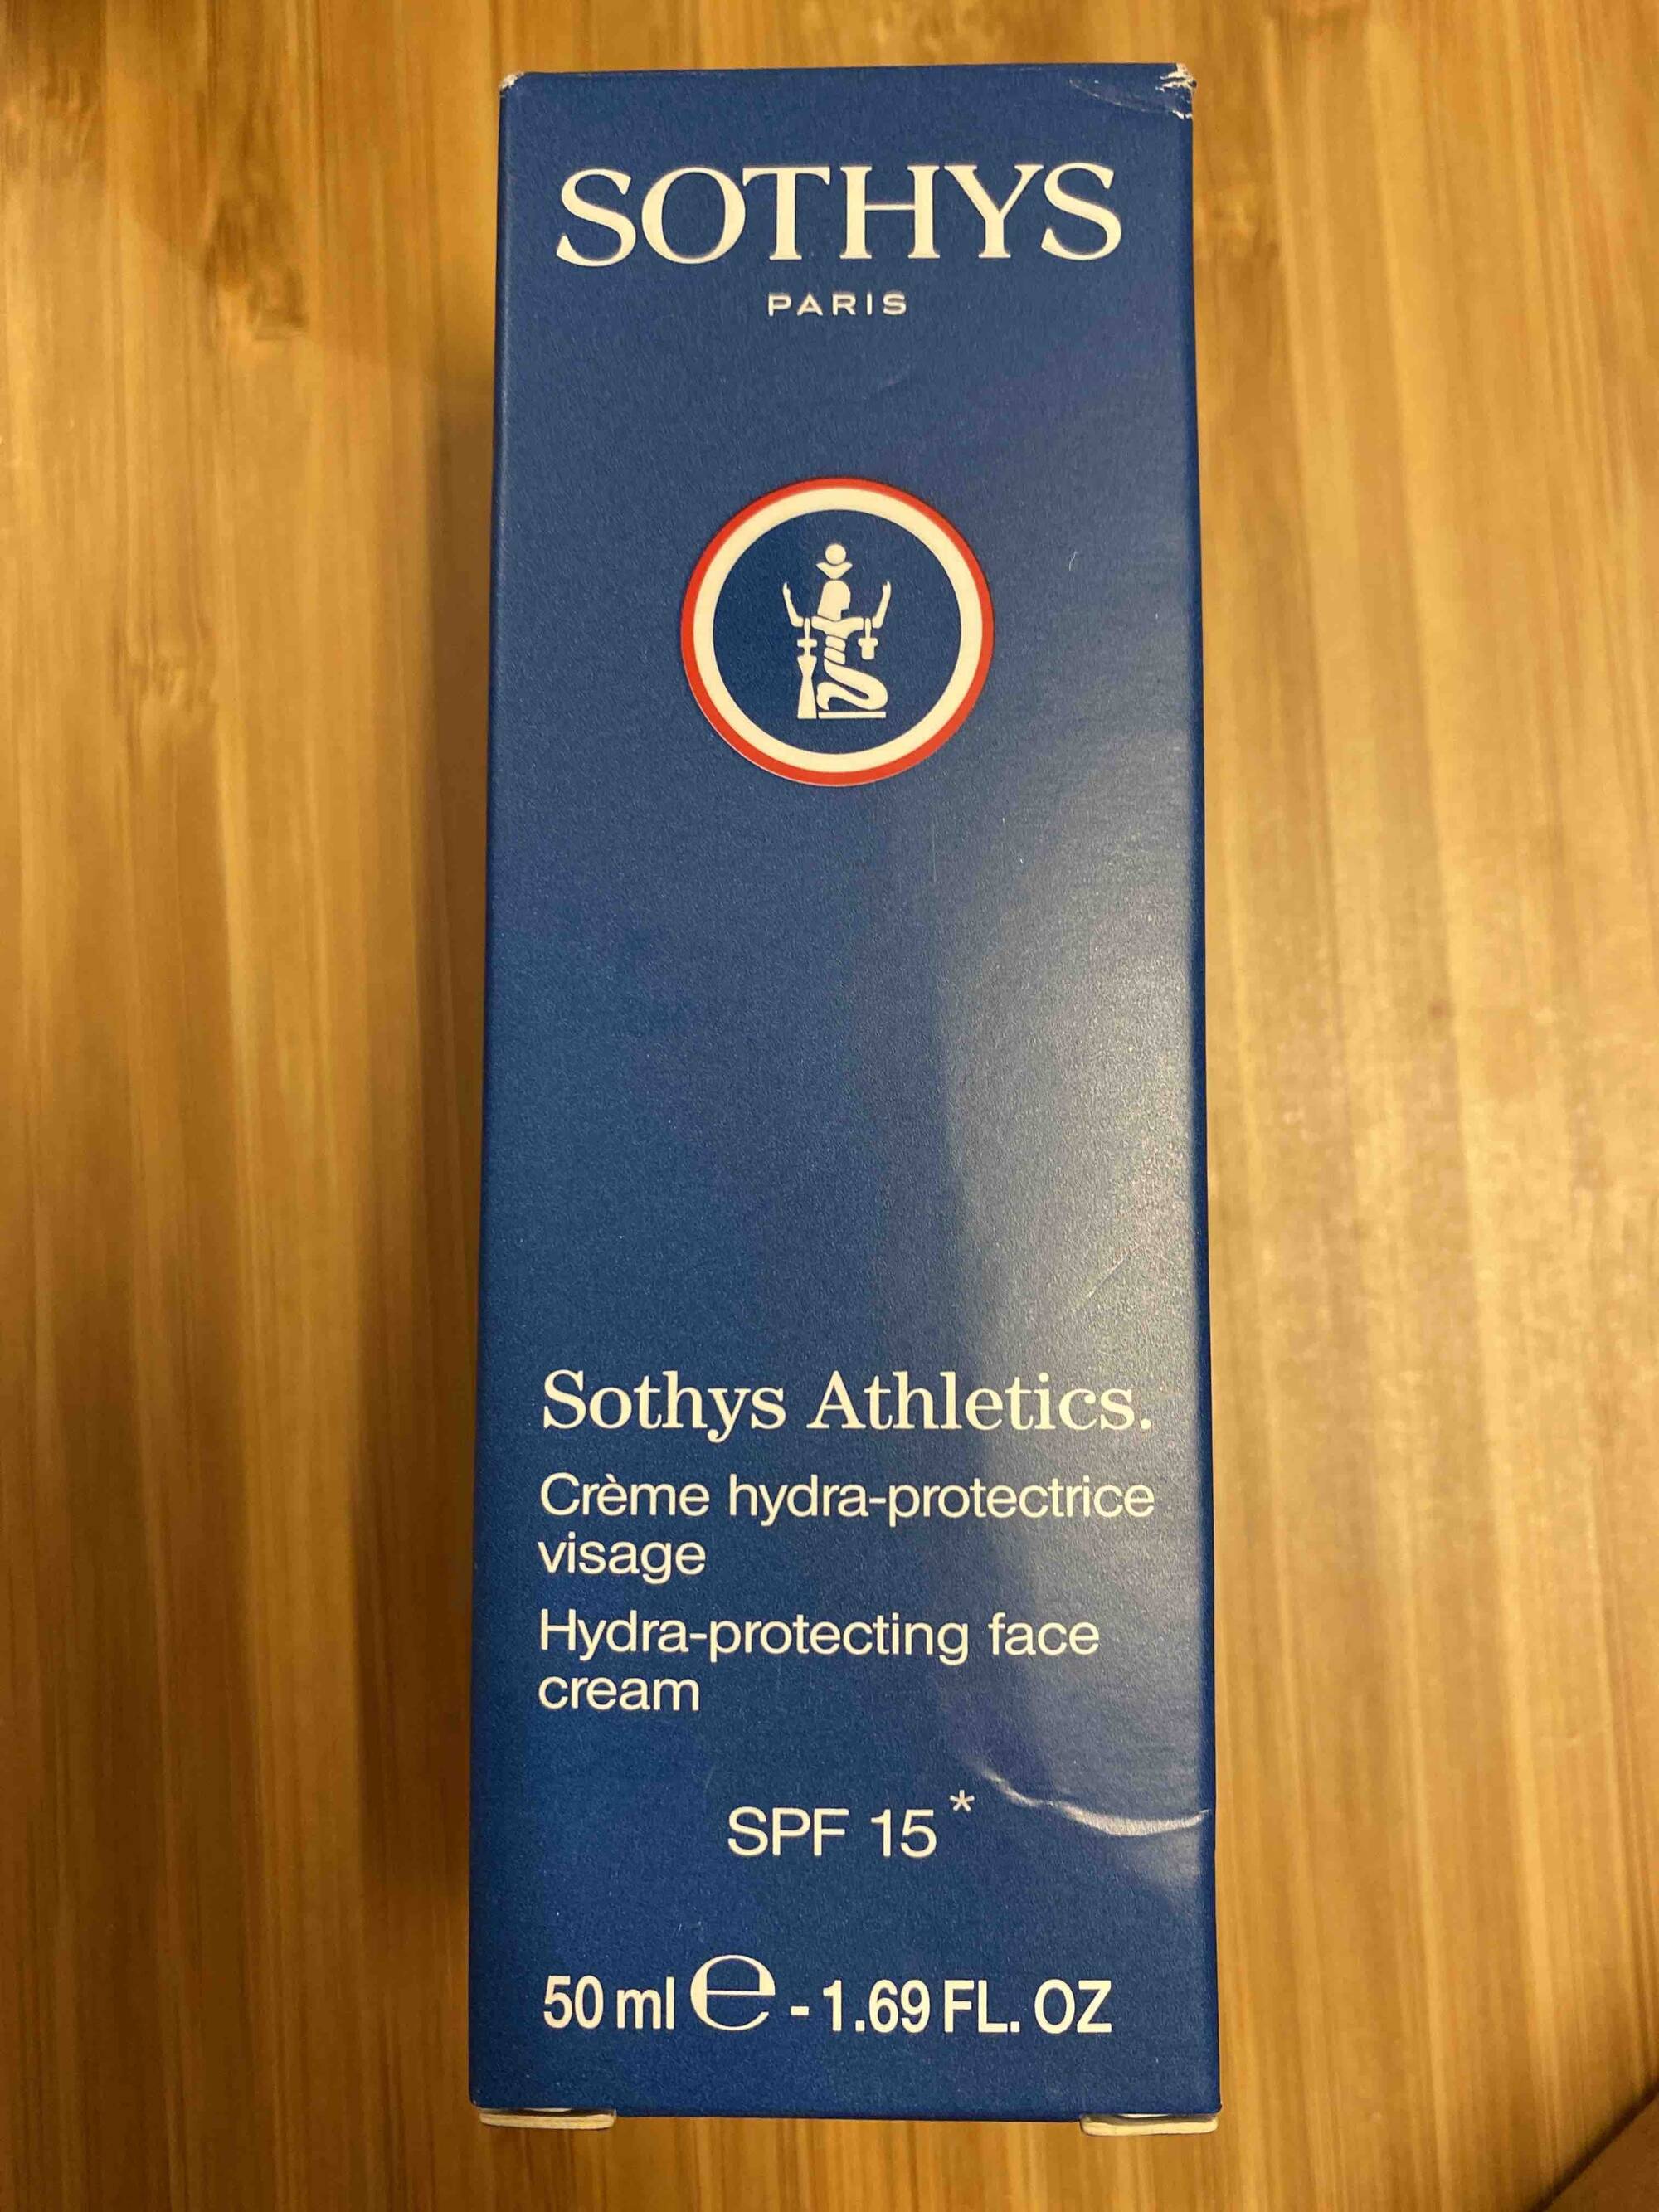 SOTHYS - Sothys athletics. - Crème hydra-protectrice visage